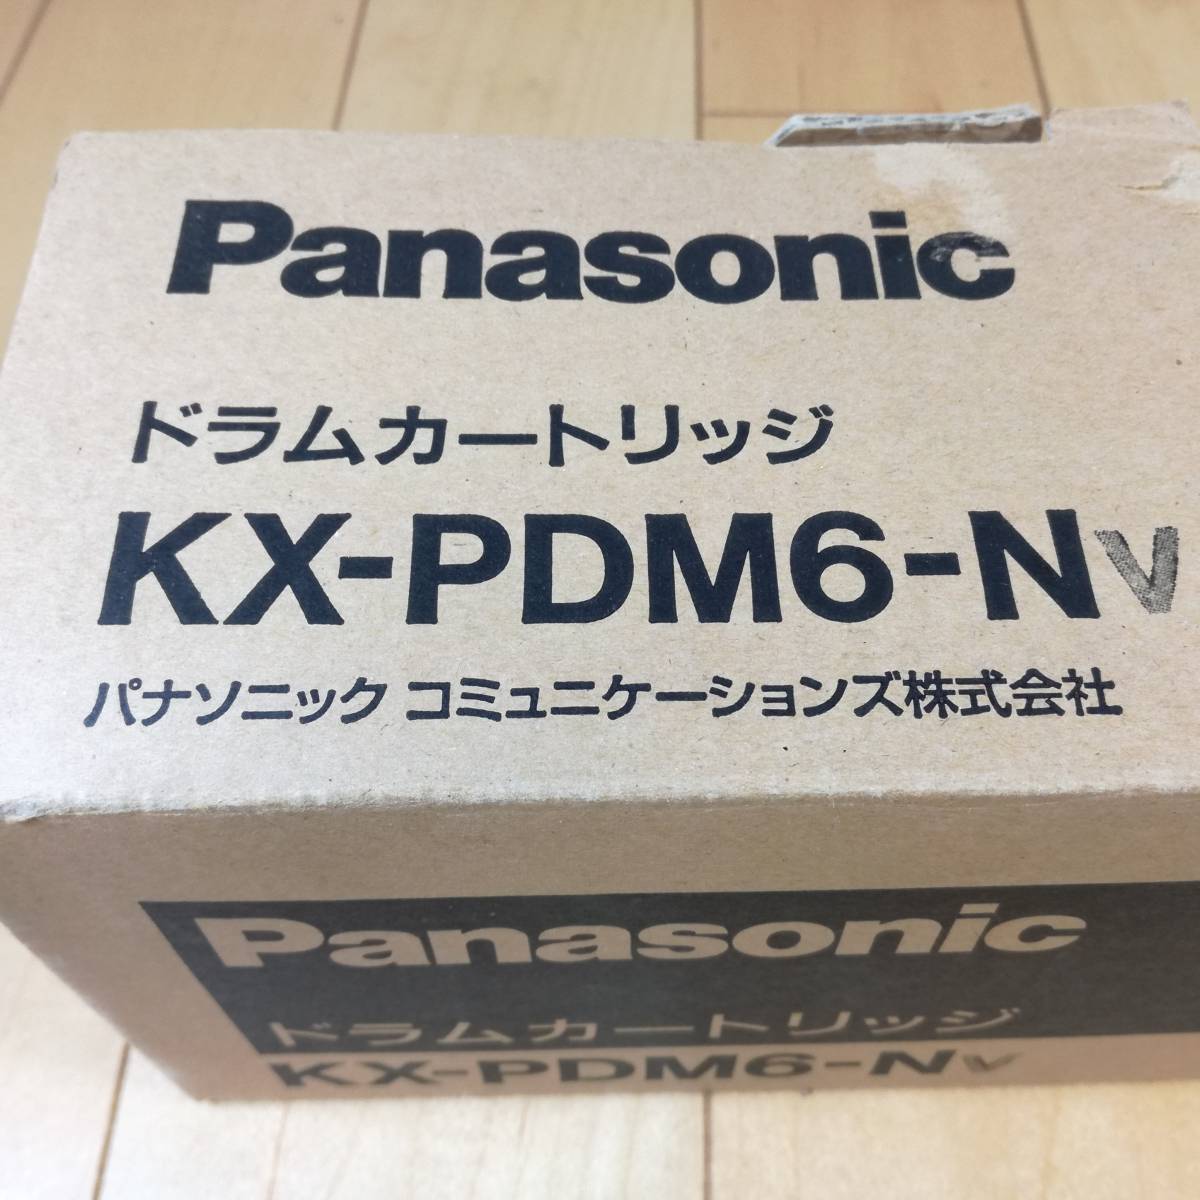  new goods, unused!! Panasonic drum cartridge KX-PDM6-N